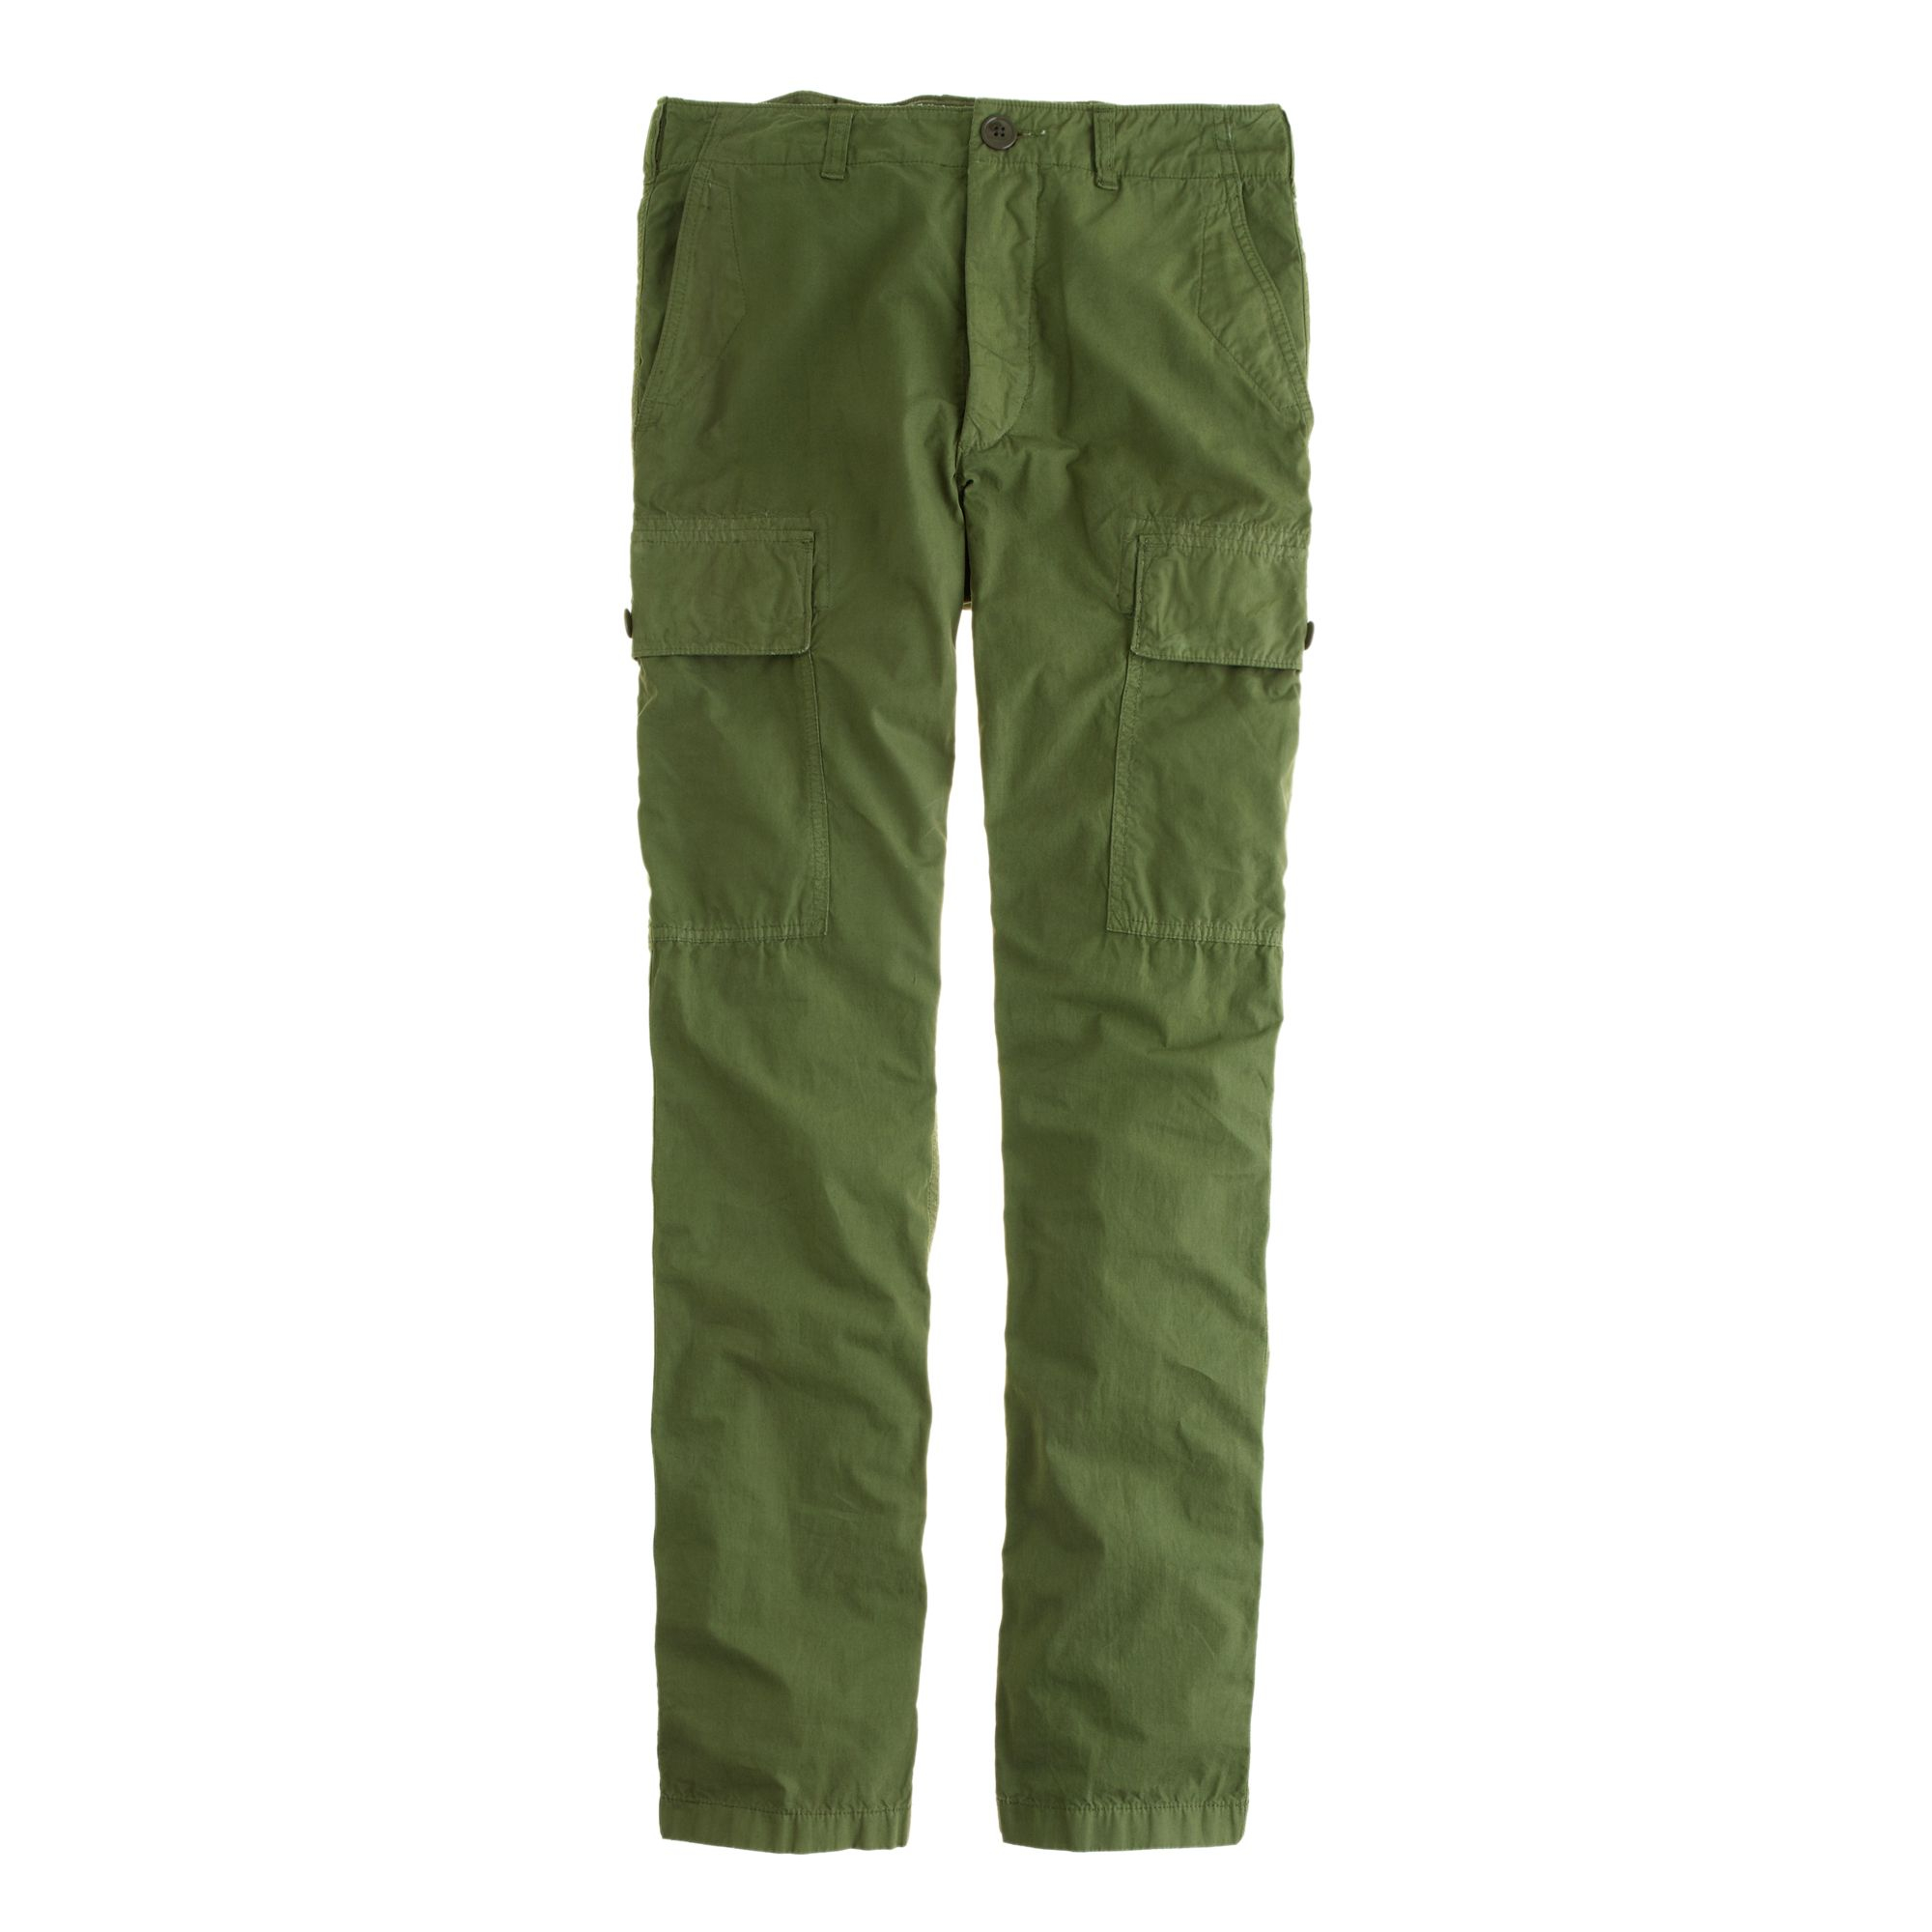 J.Crew Slim Garment Dyed Cargo Pant in Green for Men - Lyst